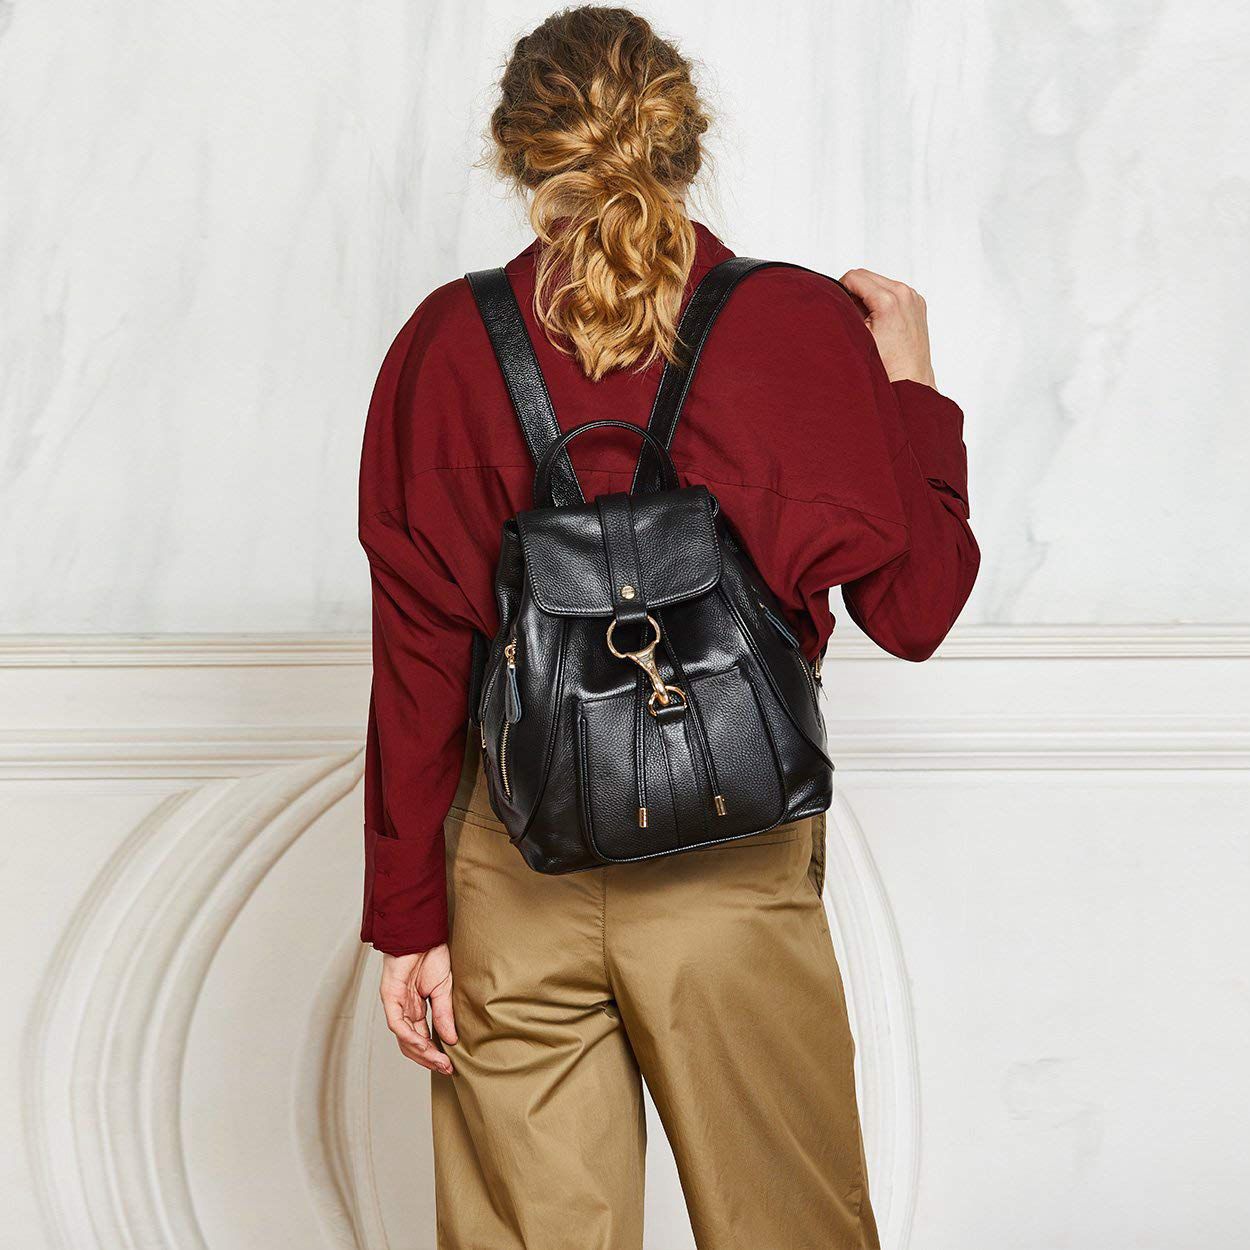 Leather Backpacks Purse for Women Ladies Fashion Travel Shoulder Bag (Black) - ebowsos